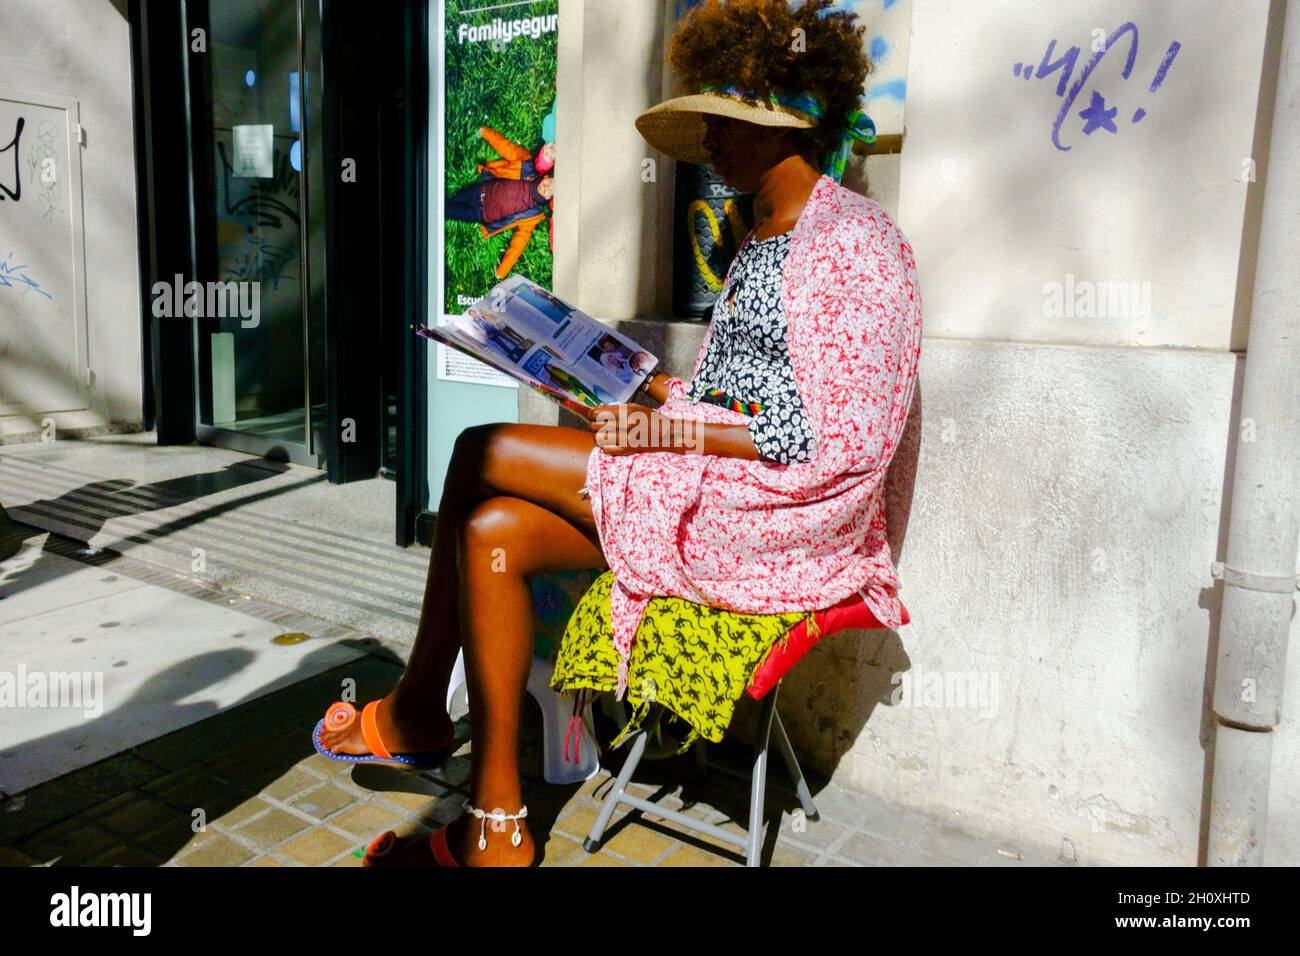 Afro-American woman reading magazine, Valencia street scene Spain Stock Photo